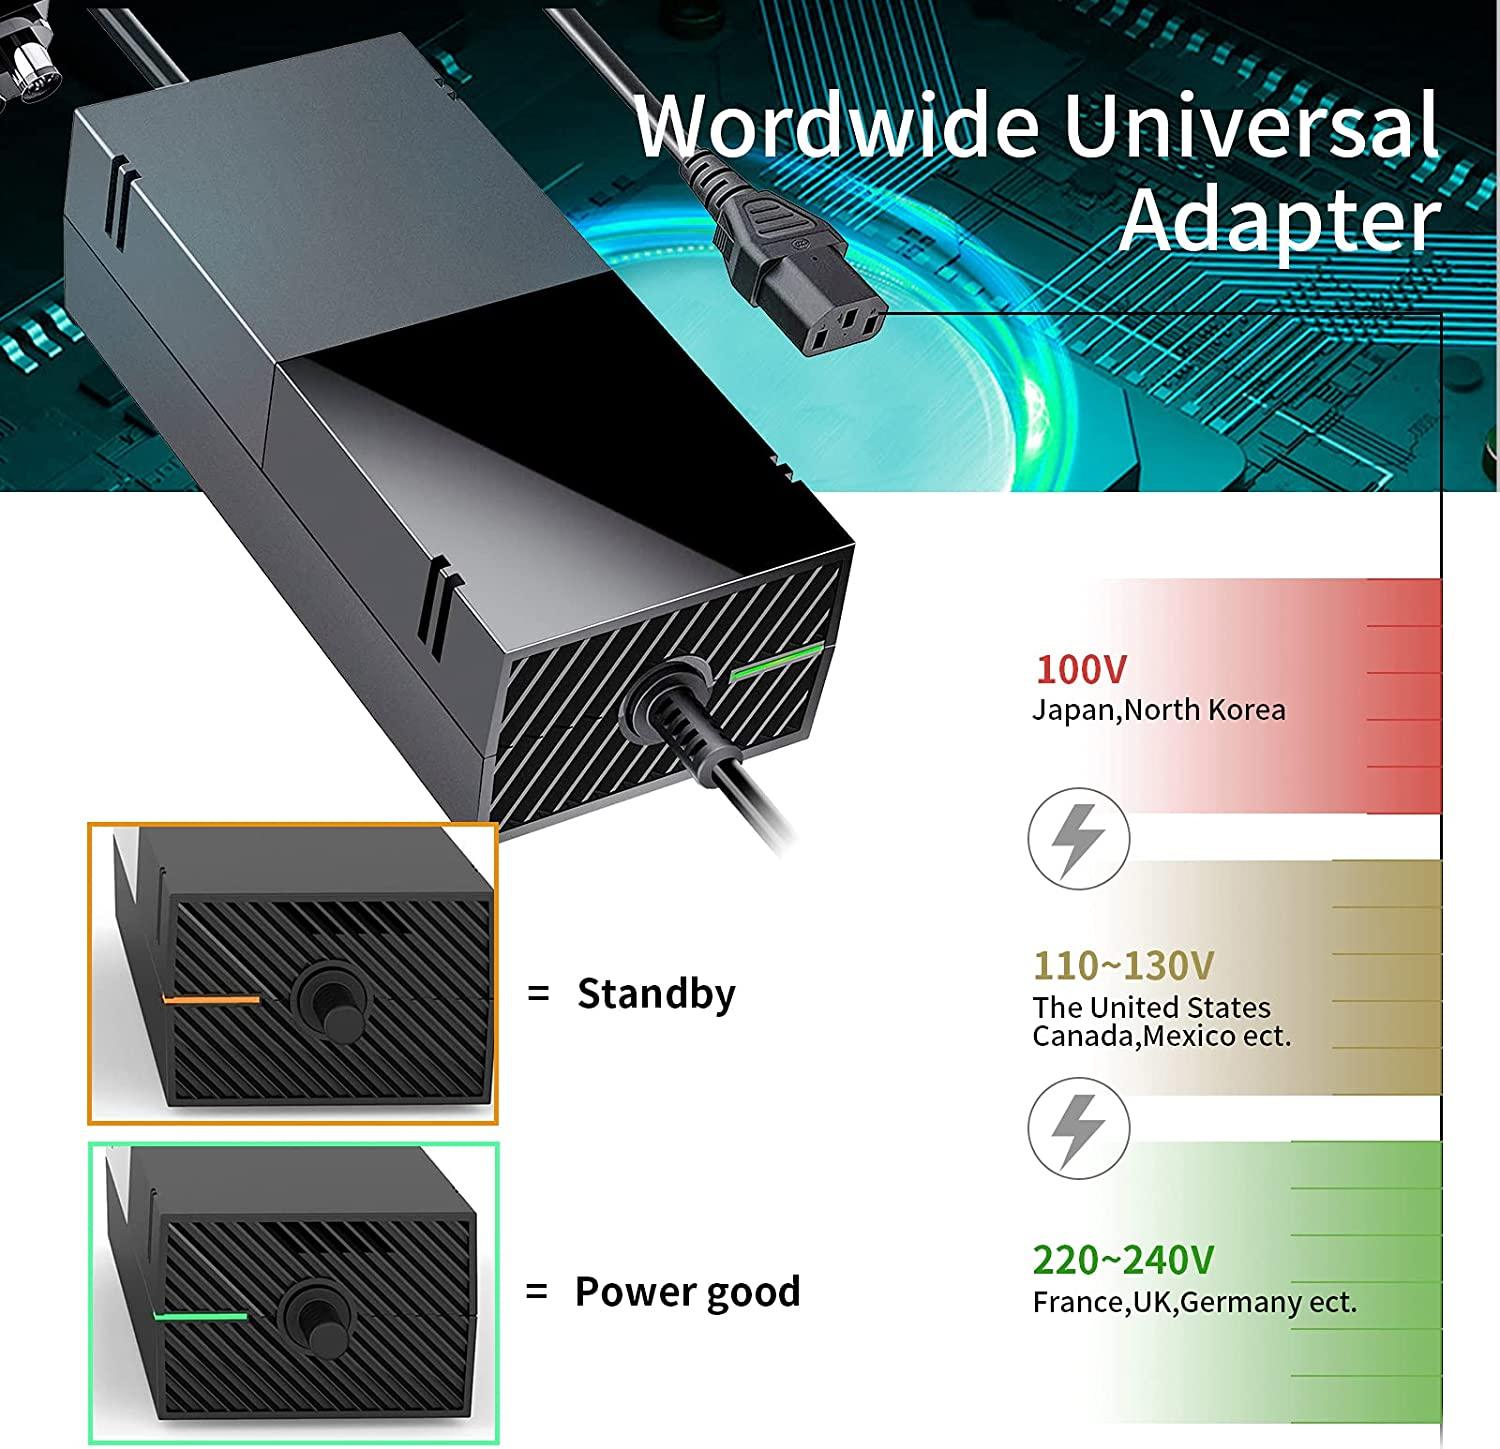 Honson Xbox One AC Adapter Power Supply - GameStore.mt | Powered by Flutisat